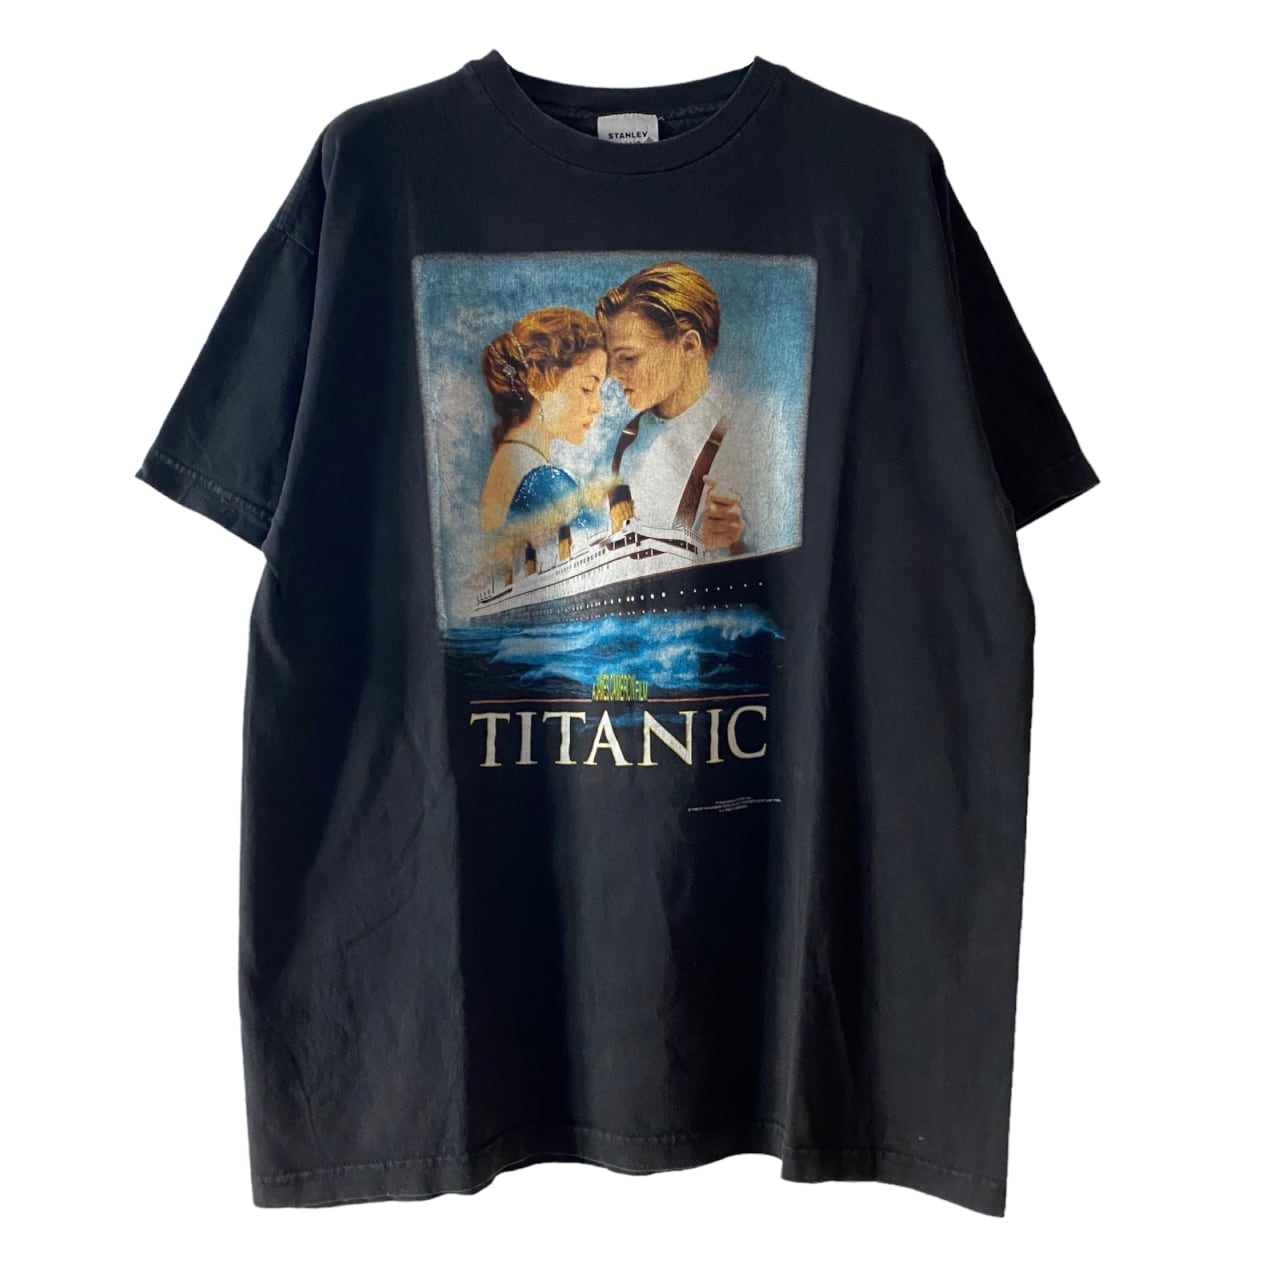 Titanic 1998 Movie Promo Tee